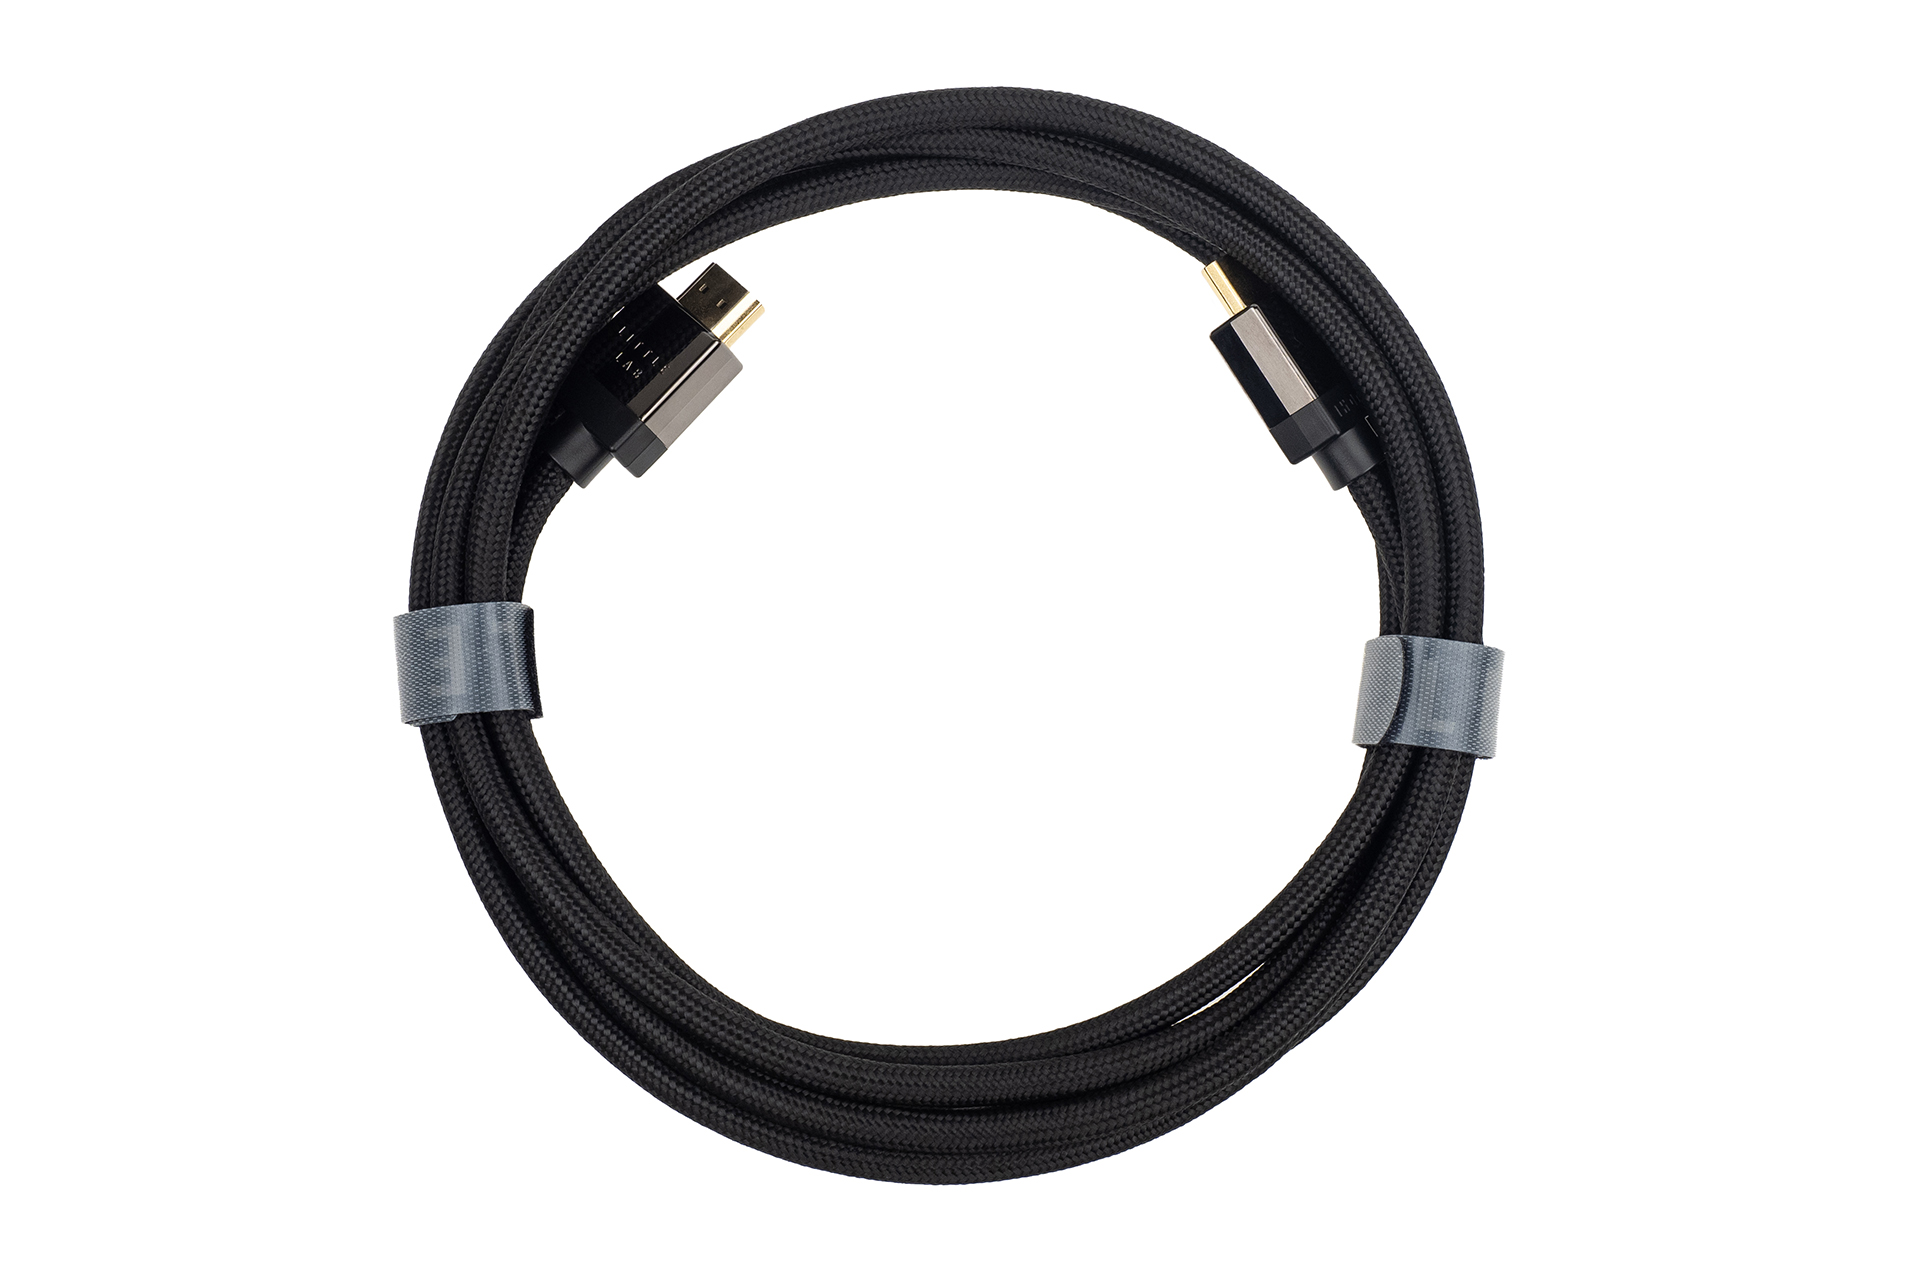 HDMI кабели Little Lab Ocean (8K/4320p/HDR/60p/48Gbps/10% Silver) X 3.0m (LL-O2-030) hdmi кабели little lab ocean 8k 4320p hdr 60p 48gbps 10% silver x 3 0m ll o2 030